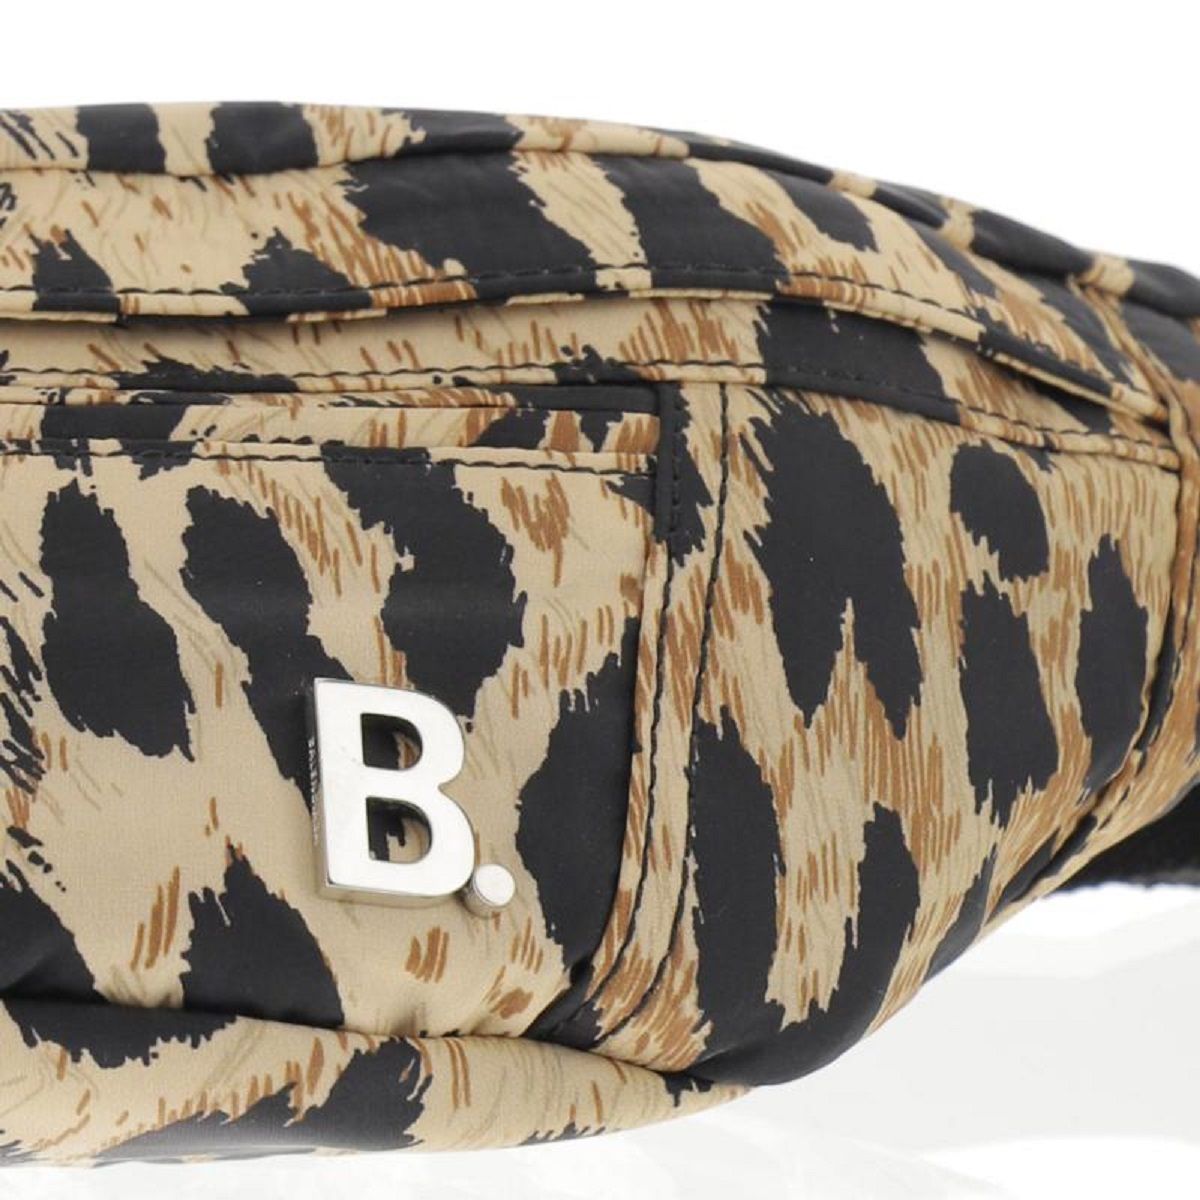 Balenciaga Nylon Leopard Print Belt Bag 580028 - LUXURYMRKT